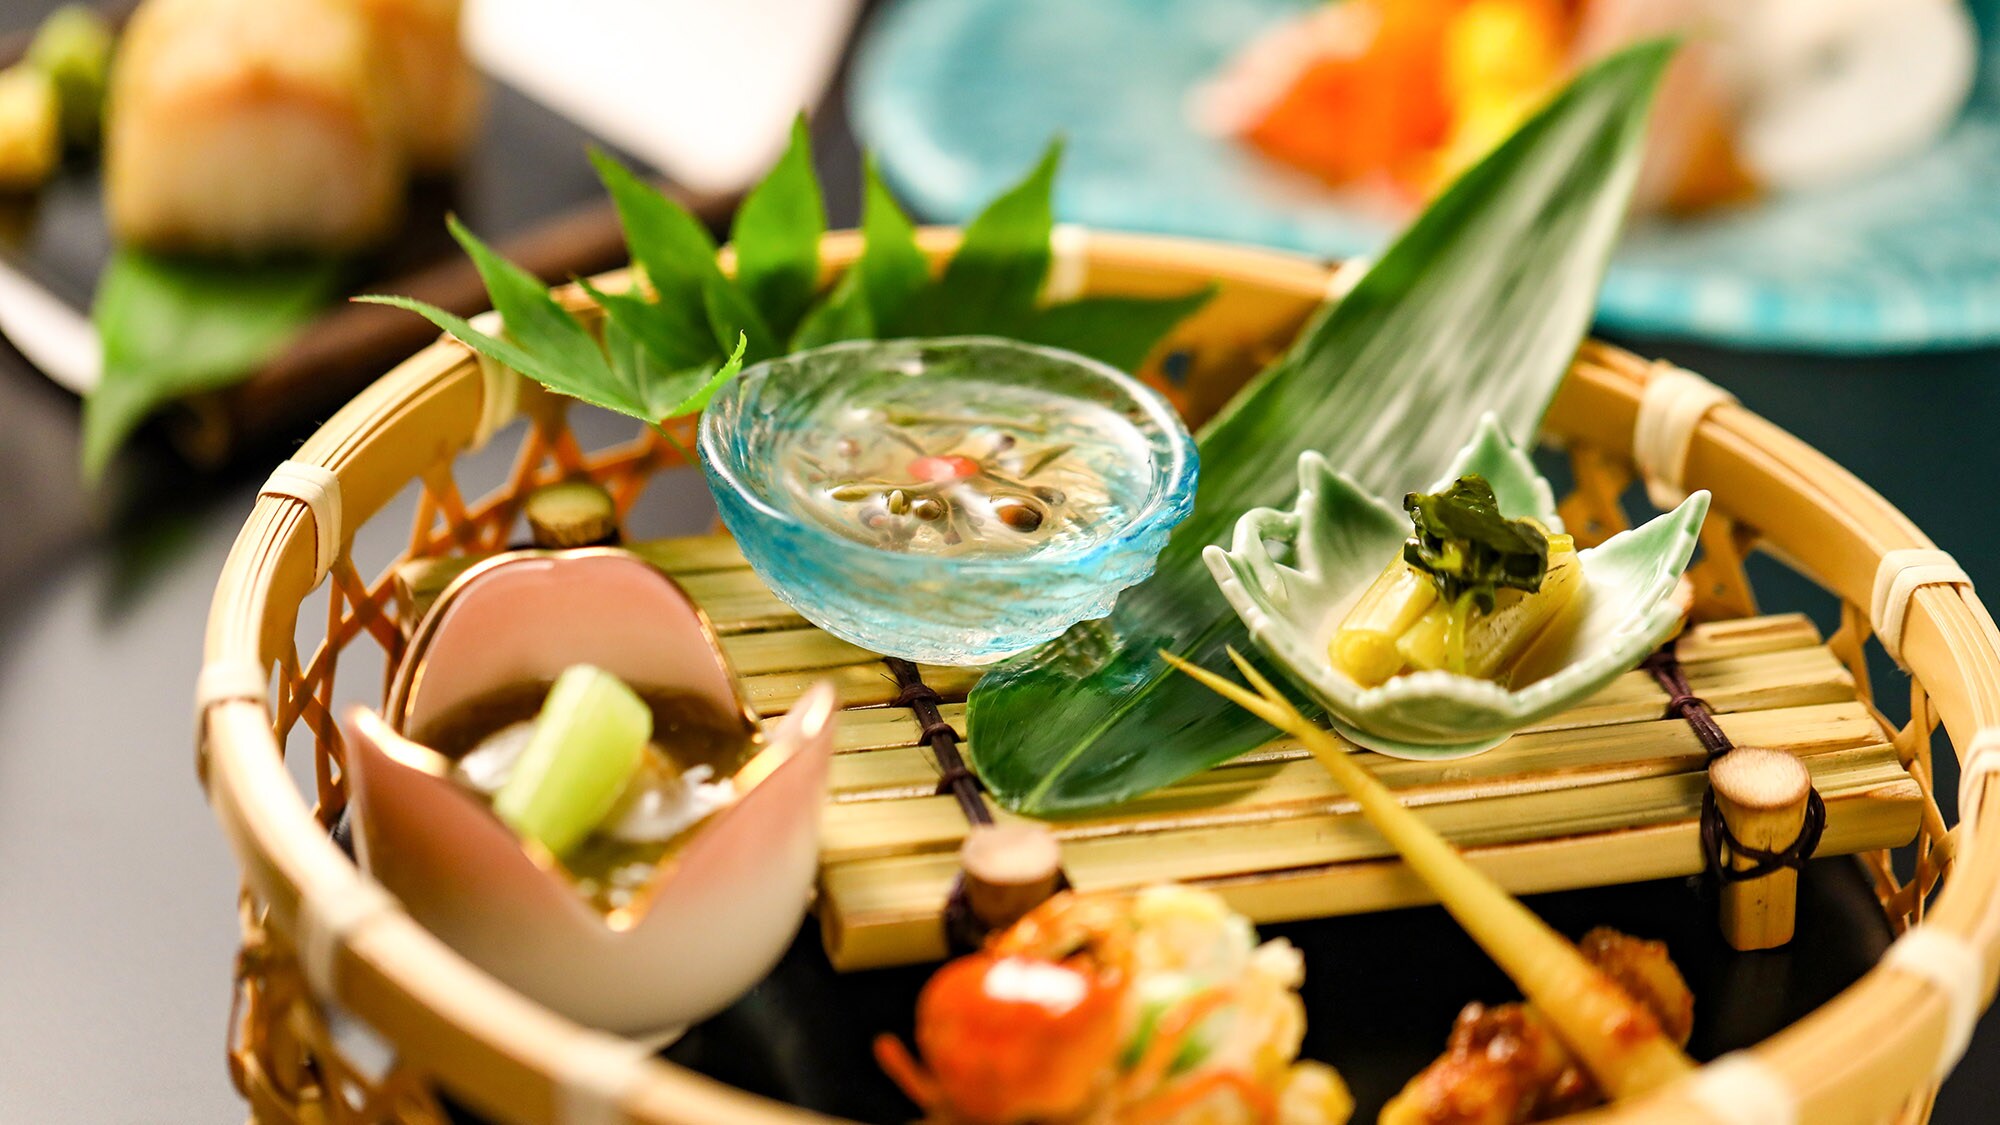 ・[Dinner example] Enjoy Shinshu ingredients with seasonal hassun